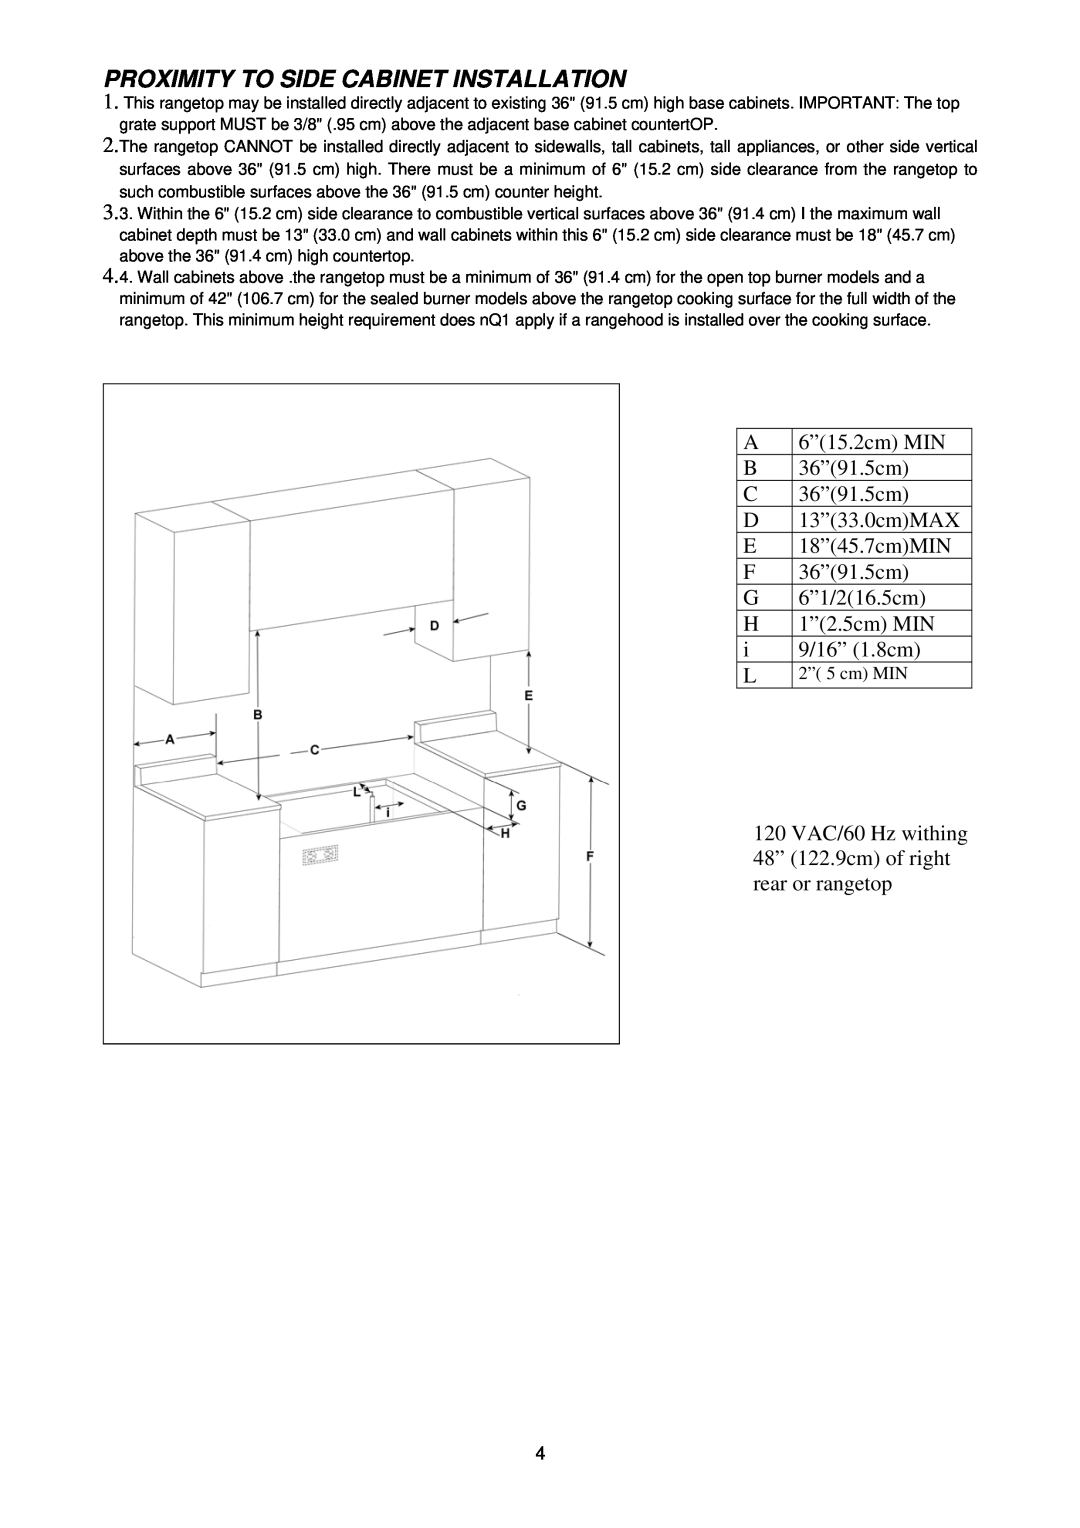 Bertazzoni CB36500X, CB36600X dimensions Proximity To Side Cabinet Installation, 2” 5 cm MIN 